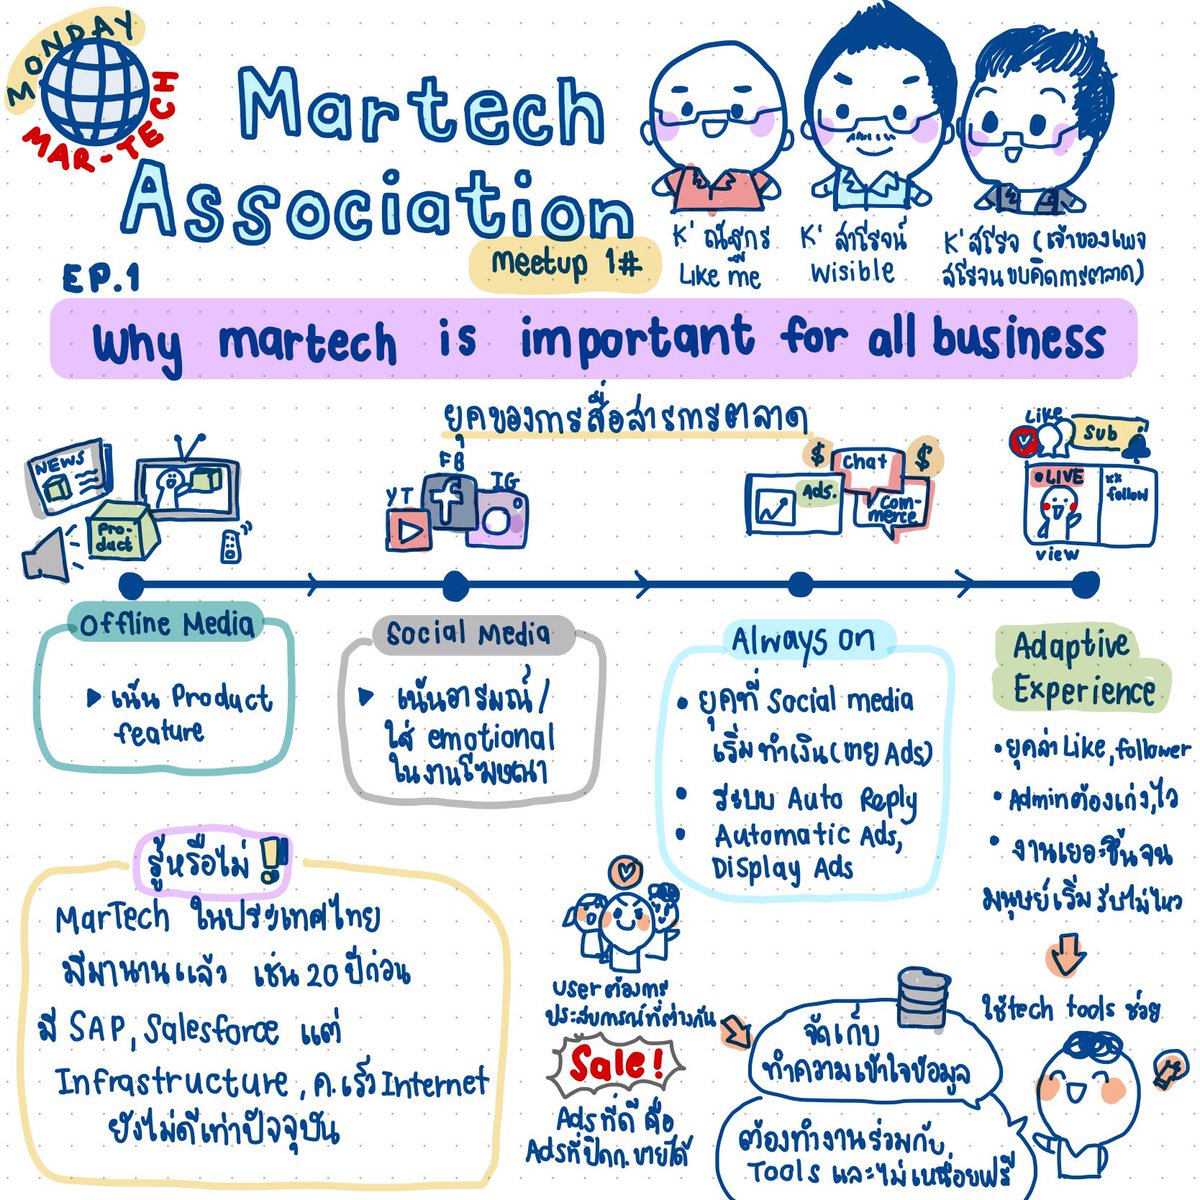 #martechmonday ในหัวข้อ 'Why Martech is important for all business' ตอนที่ 1
ยุคของการทำการตลาดโดยแบ่งออกเป็น 4 ยุค ดังนี้
📺ยุค Offline Media 

🌐ยุค Social Media 

👁️ยุค Always on 

🦾ยุค Adaptive Experience 
#nichavisualnote #martech #sketchnote #visualnotes #visualnotetaking